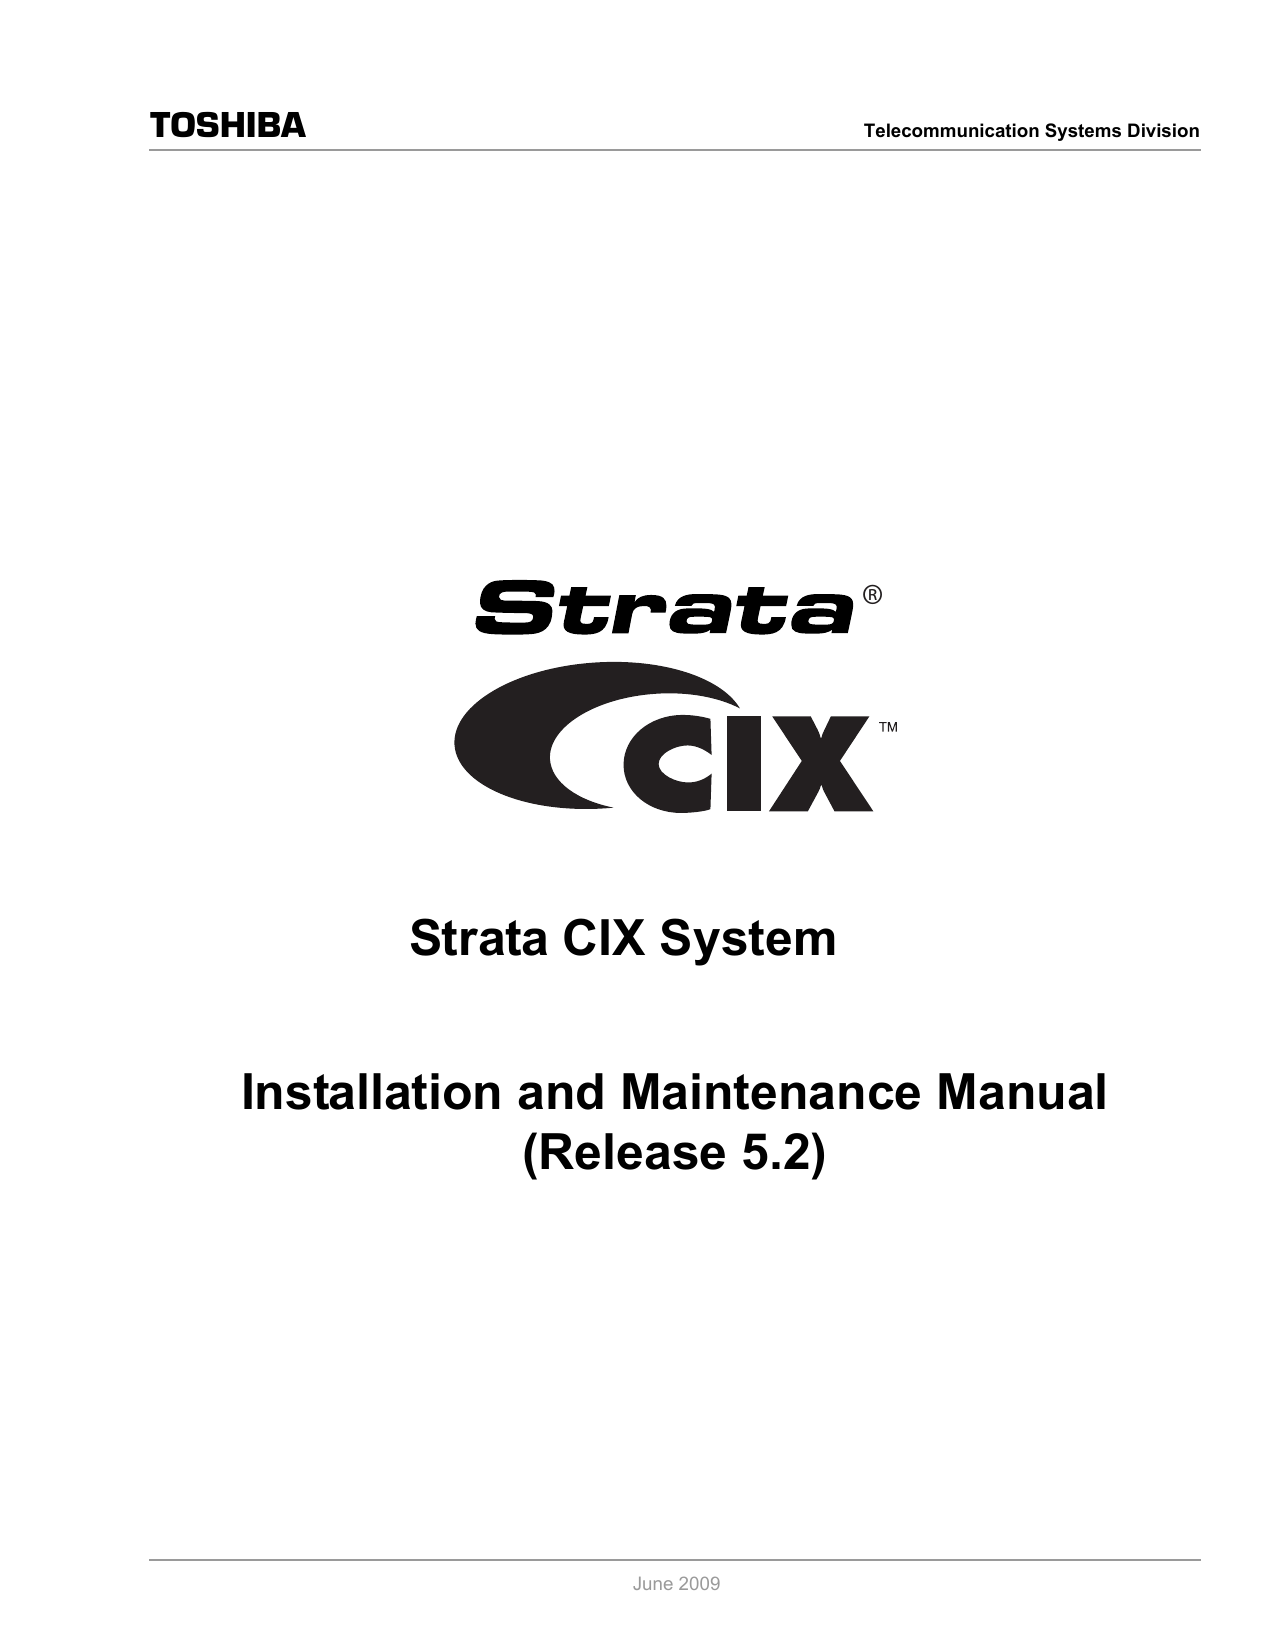 ASTU1A V1 2 Port Analog Station Expansion Card Toshiba Strata CTX CIX 100 